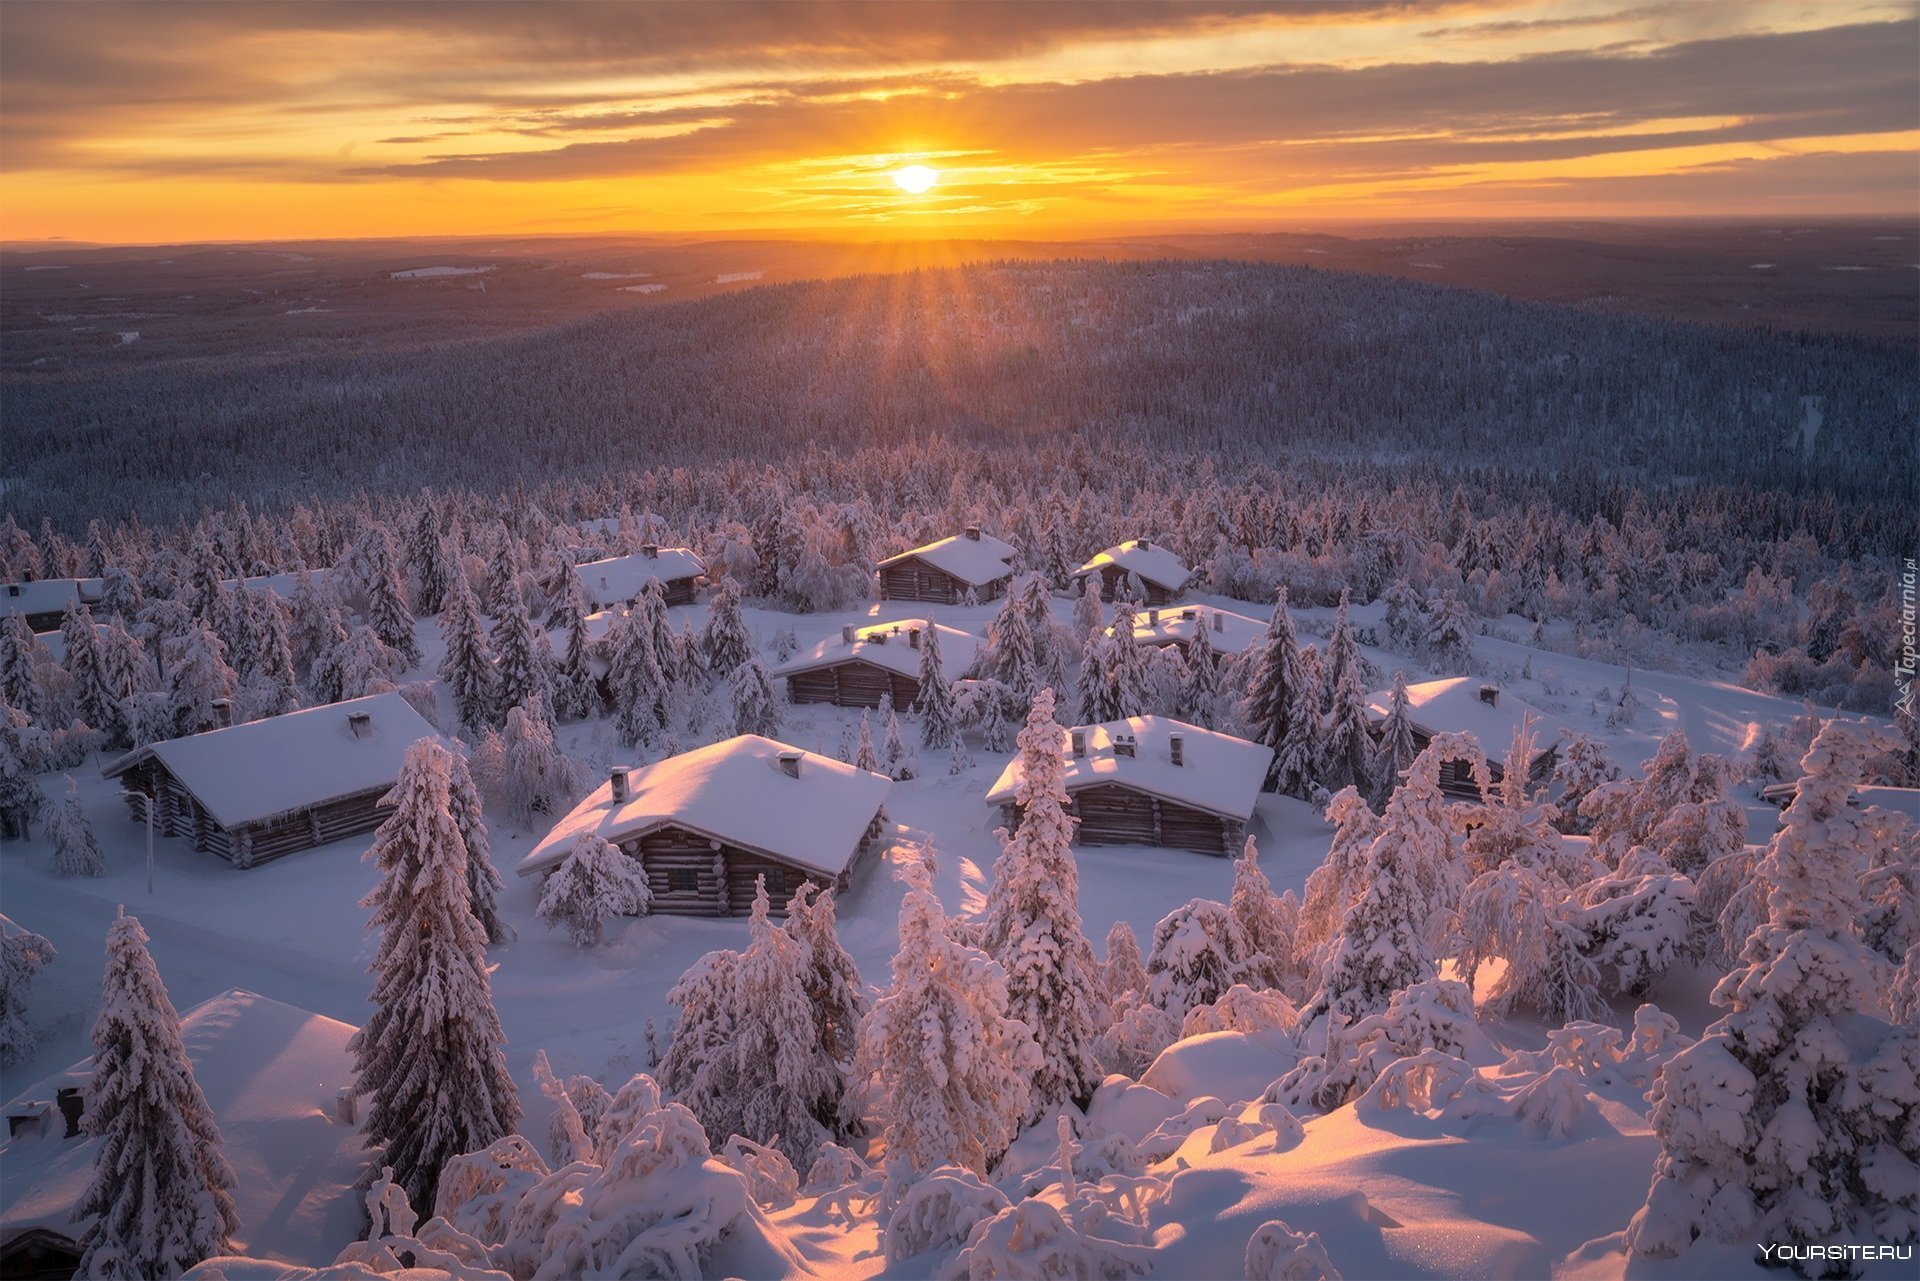 Lapland. Лапландия Финляндия. Провинция Лапландия, Финляндия. Финляндия зима Лапландия. Лапландия Финляндия природа.